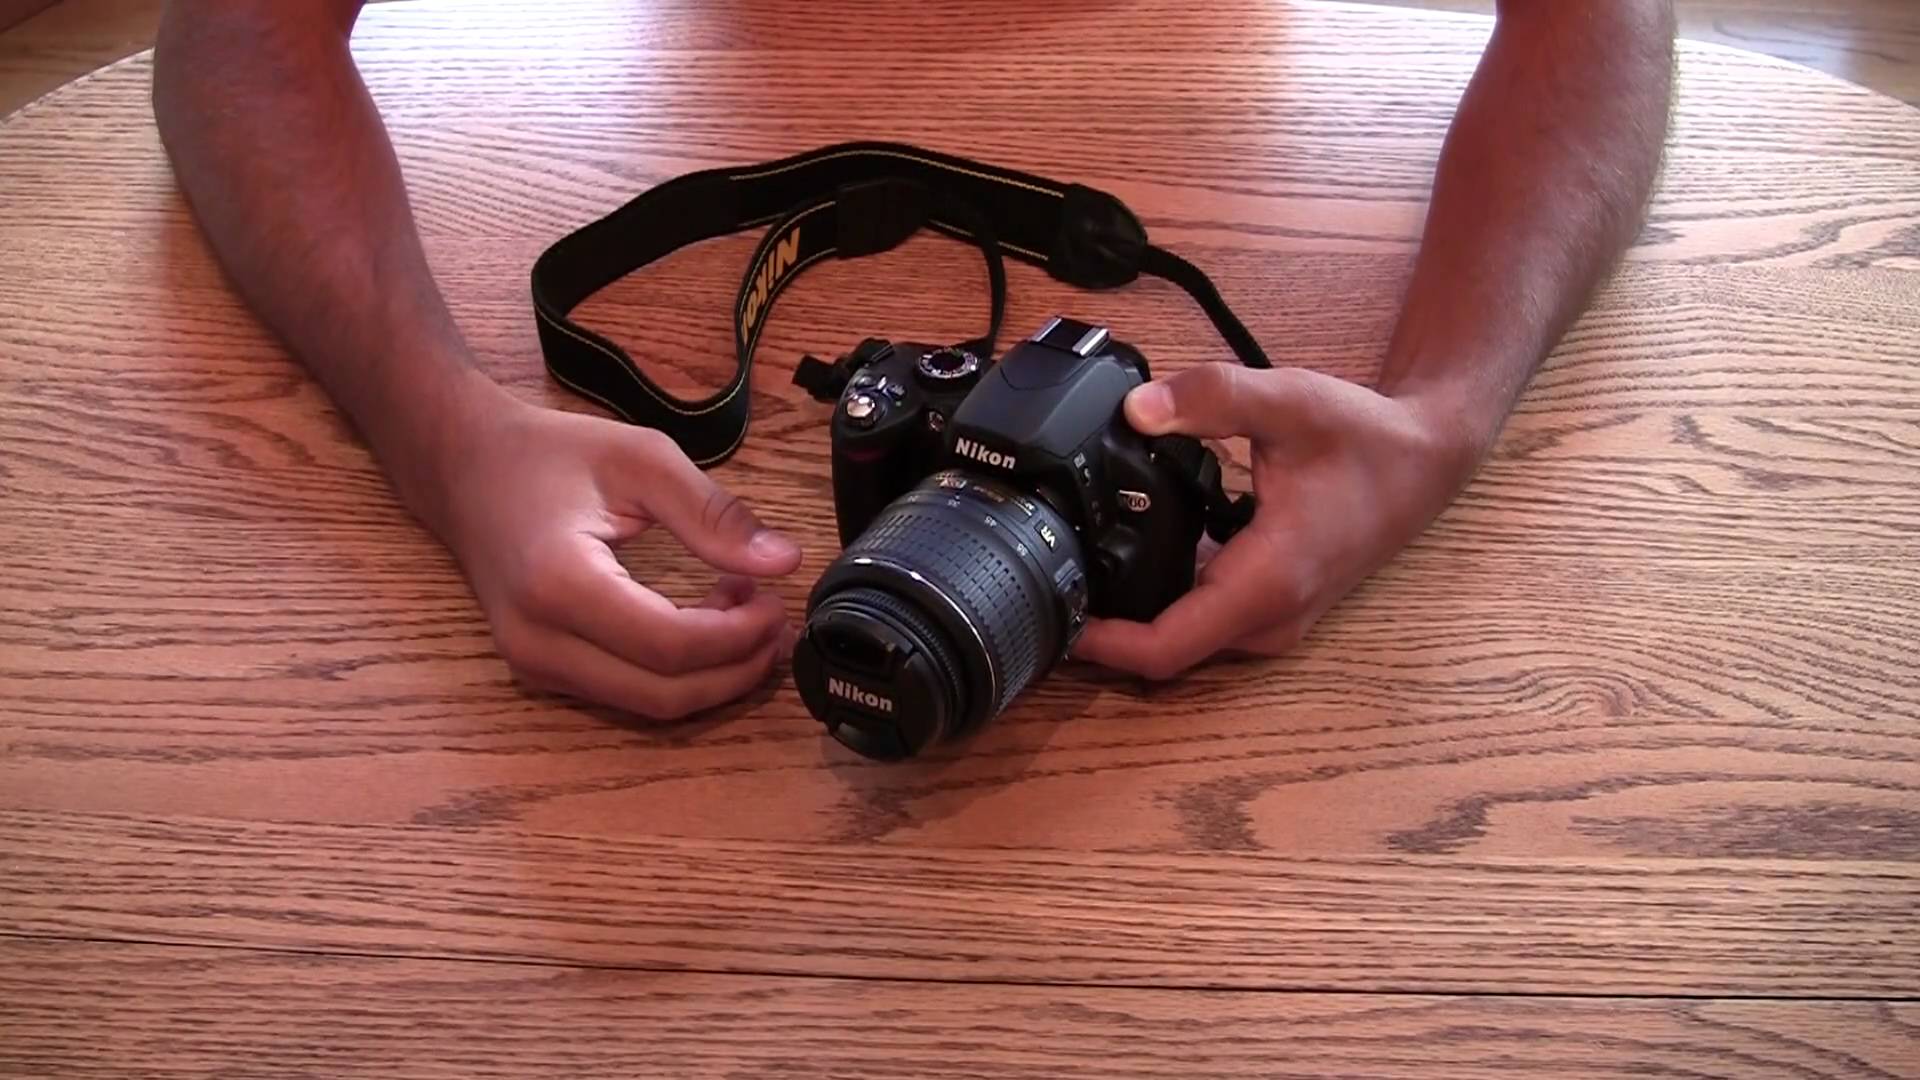 Review: Nikon D60 Digital SLR Camera